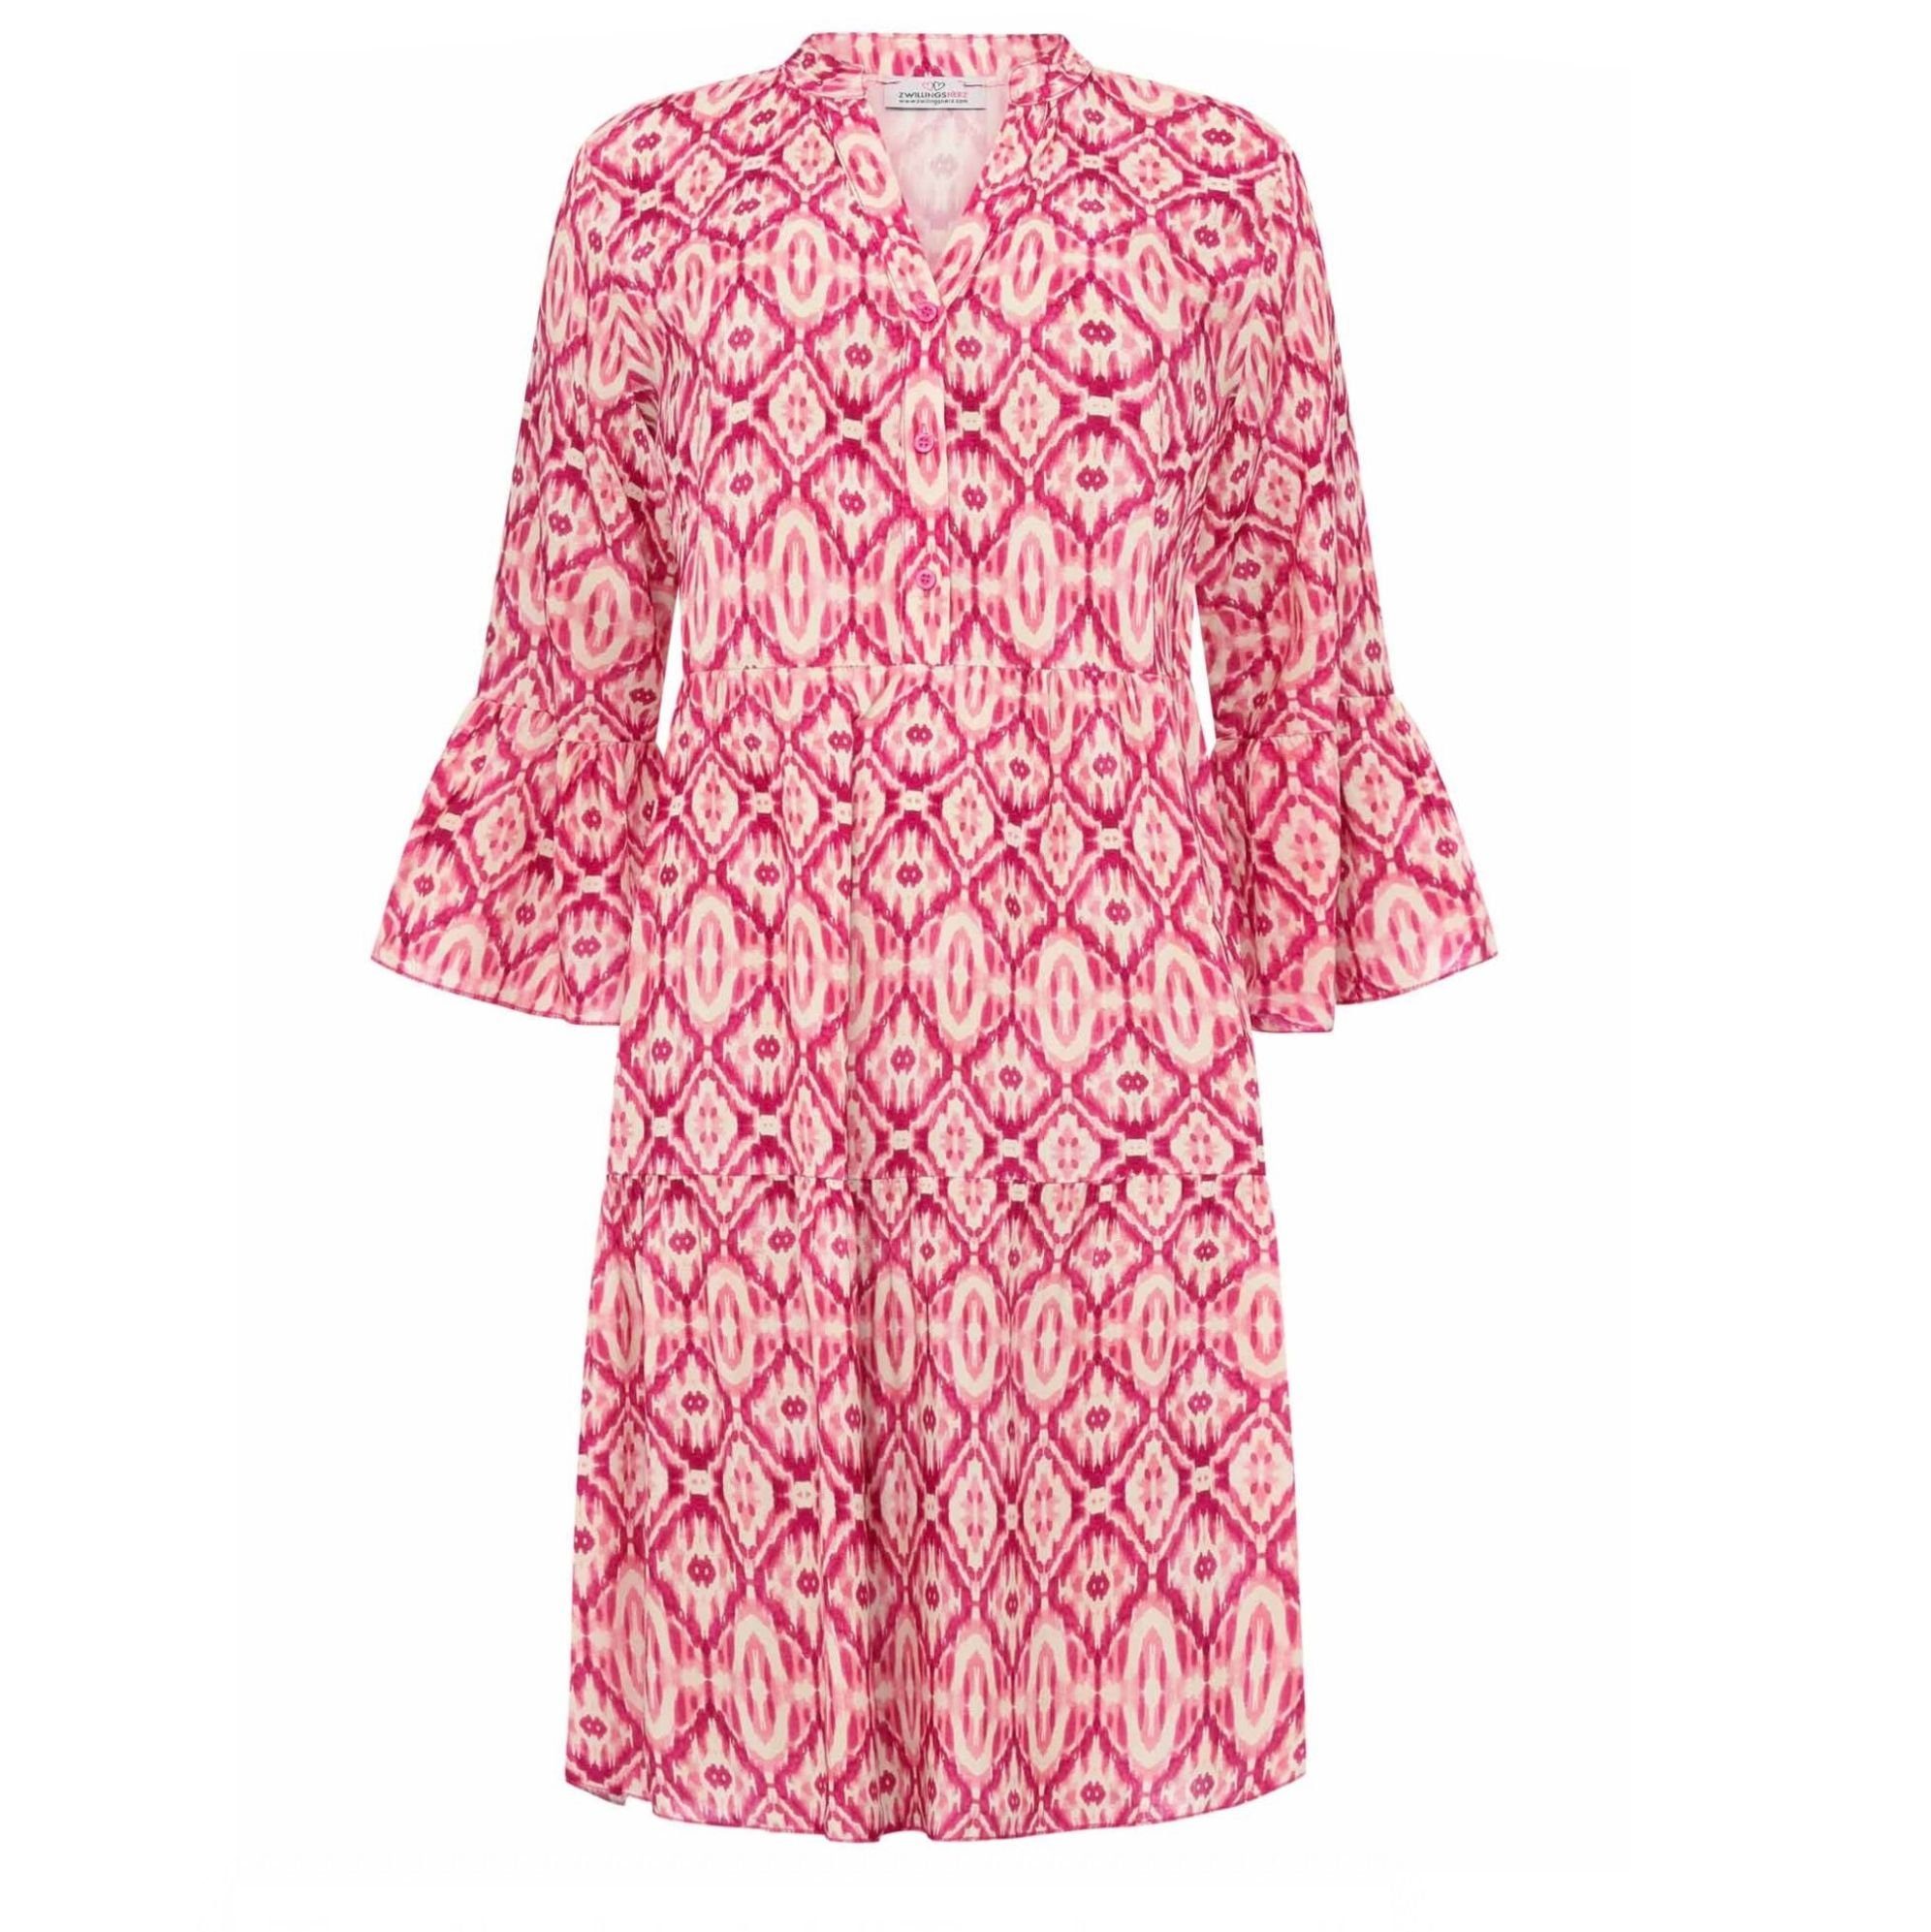 Sommerkleid pink Toskana pink-pink Farbe oder blau Zwillingsherz Kleid